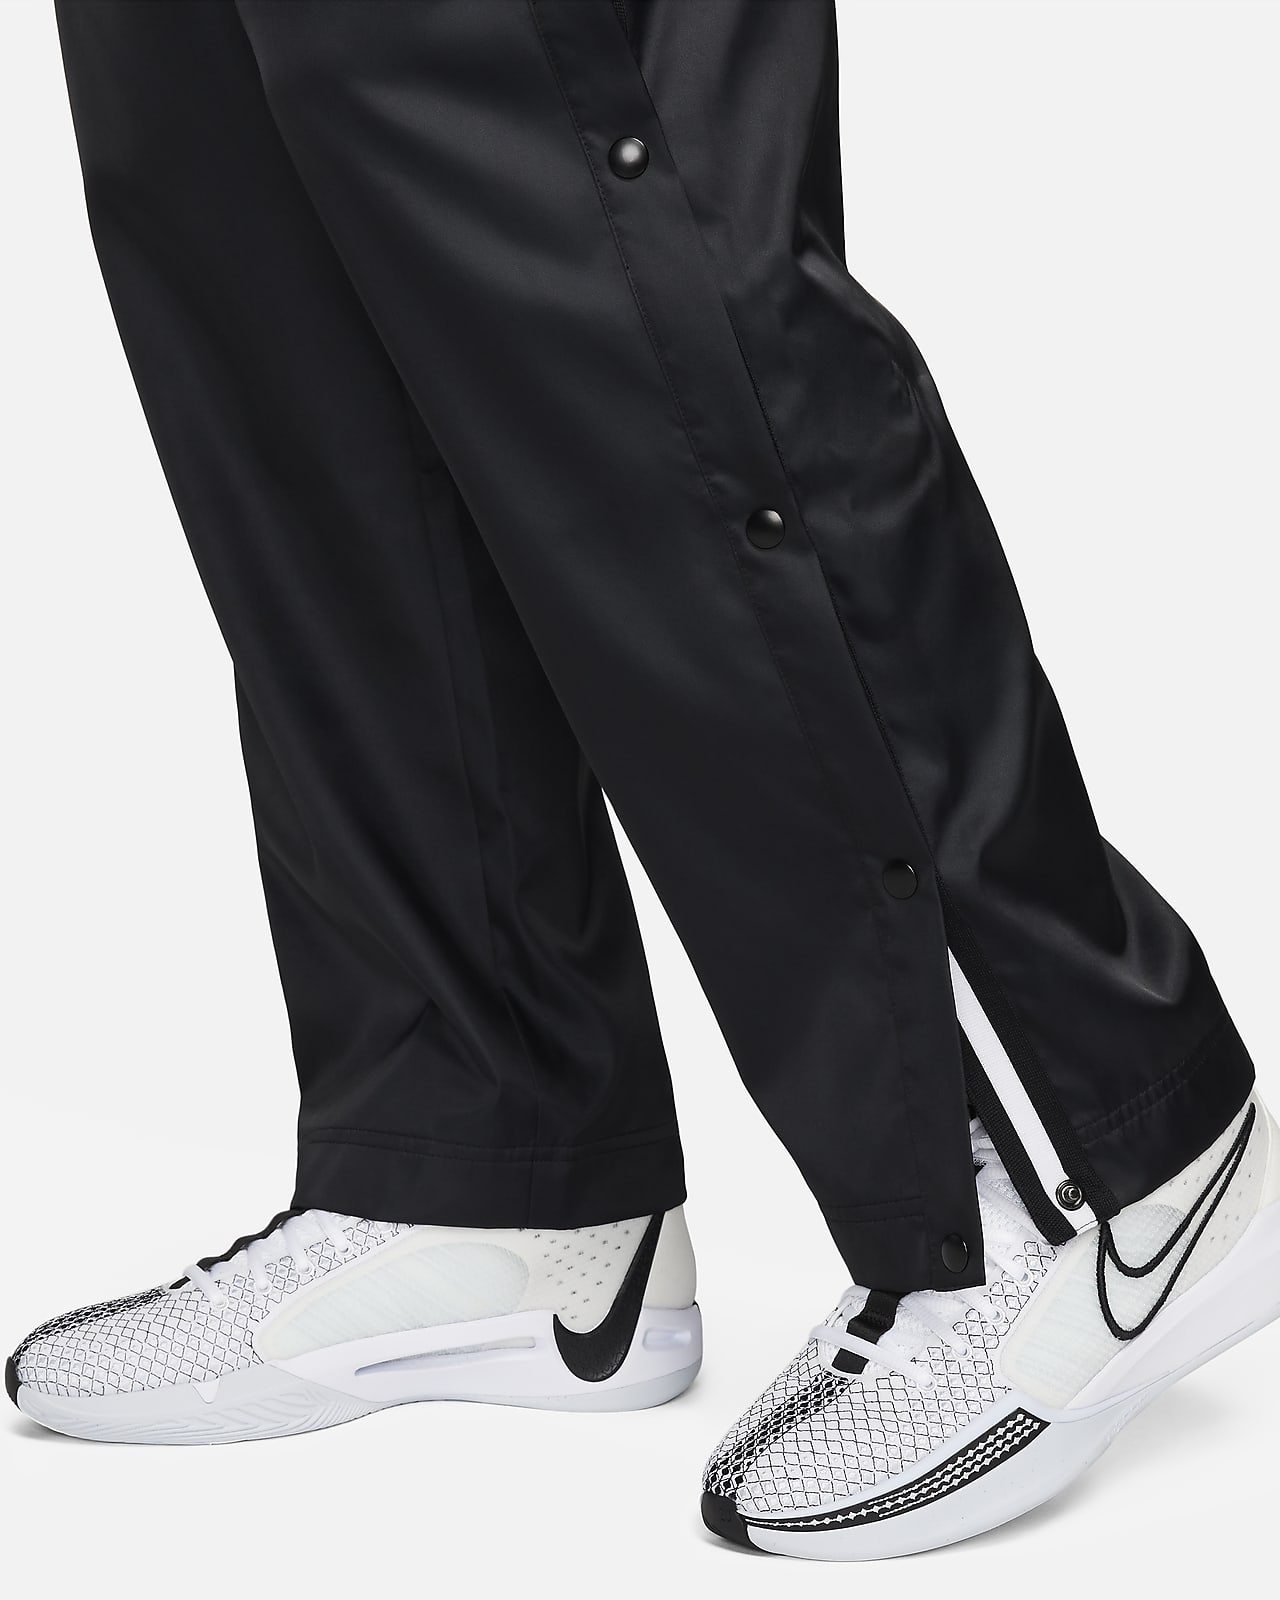 Beige Nike Authentics Tear-Away Pants